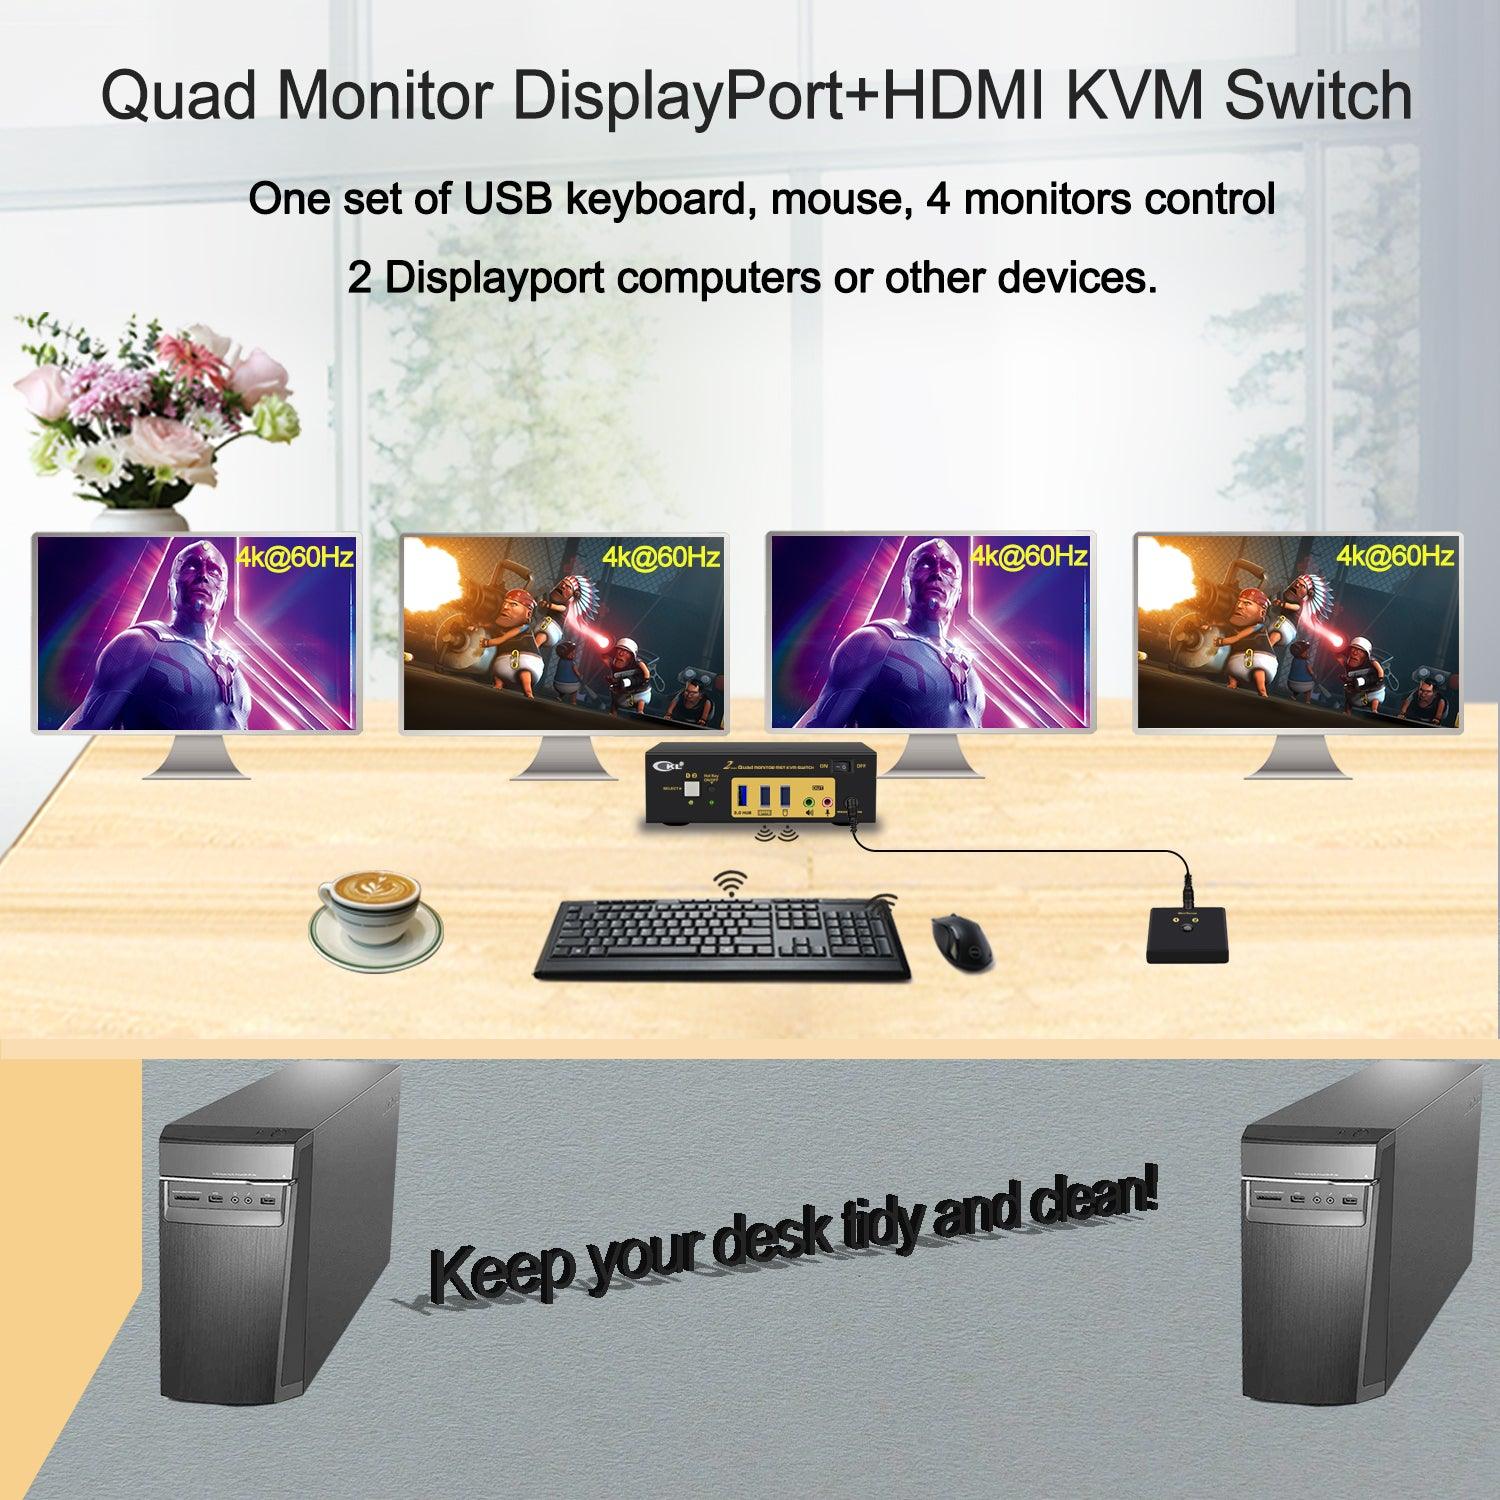 CKL DisplayPort 1.4 MST KVM Switch Quad Monitor 2 Port 4K 60Hz | DisplayPort + HDMI Output | 2 Computers 4 Monitors | Support USB 3.0, Audio, Mic. (624DH-MST) - CKL KVM Switches